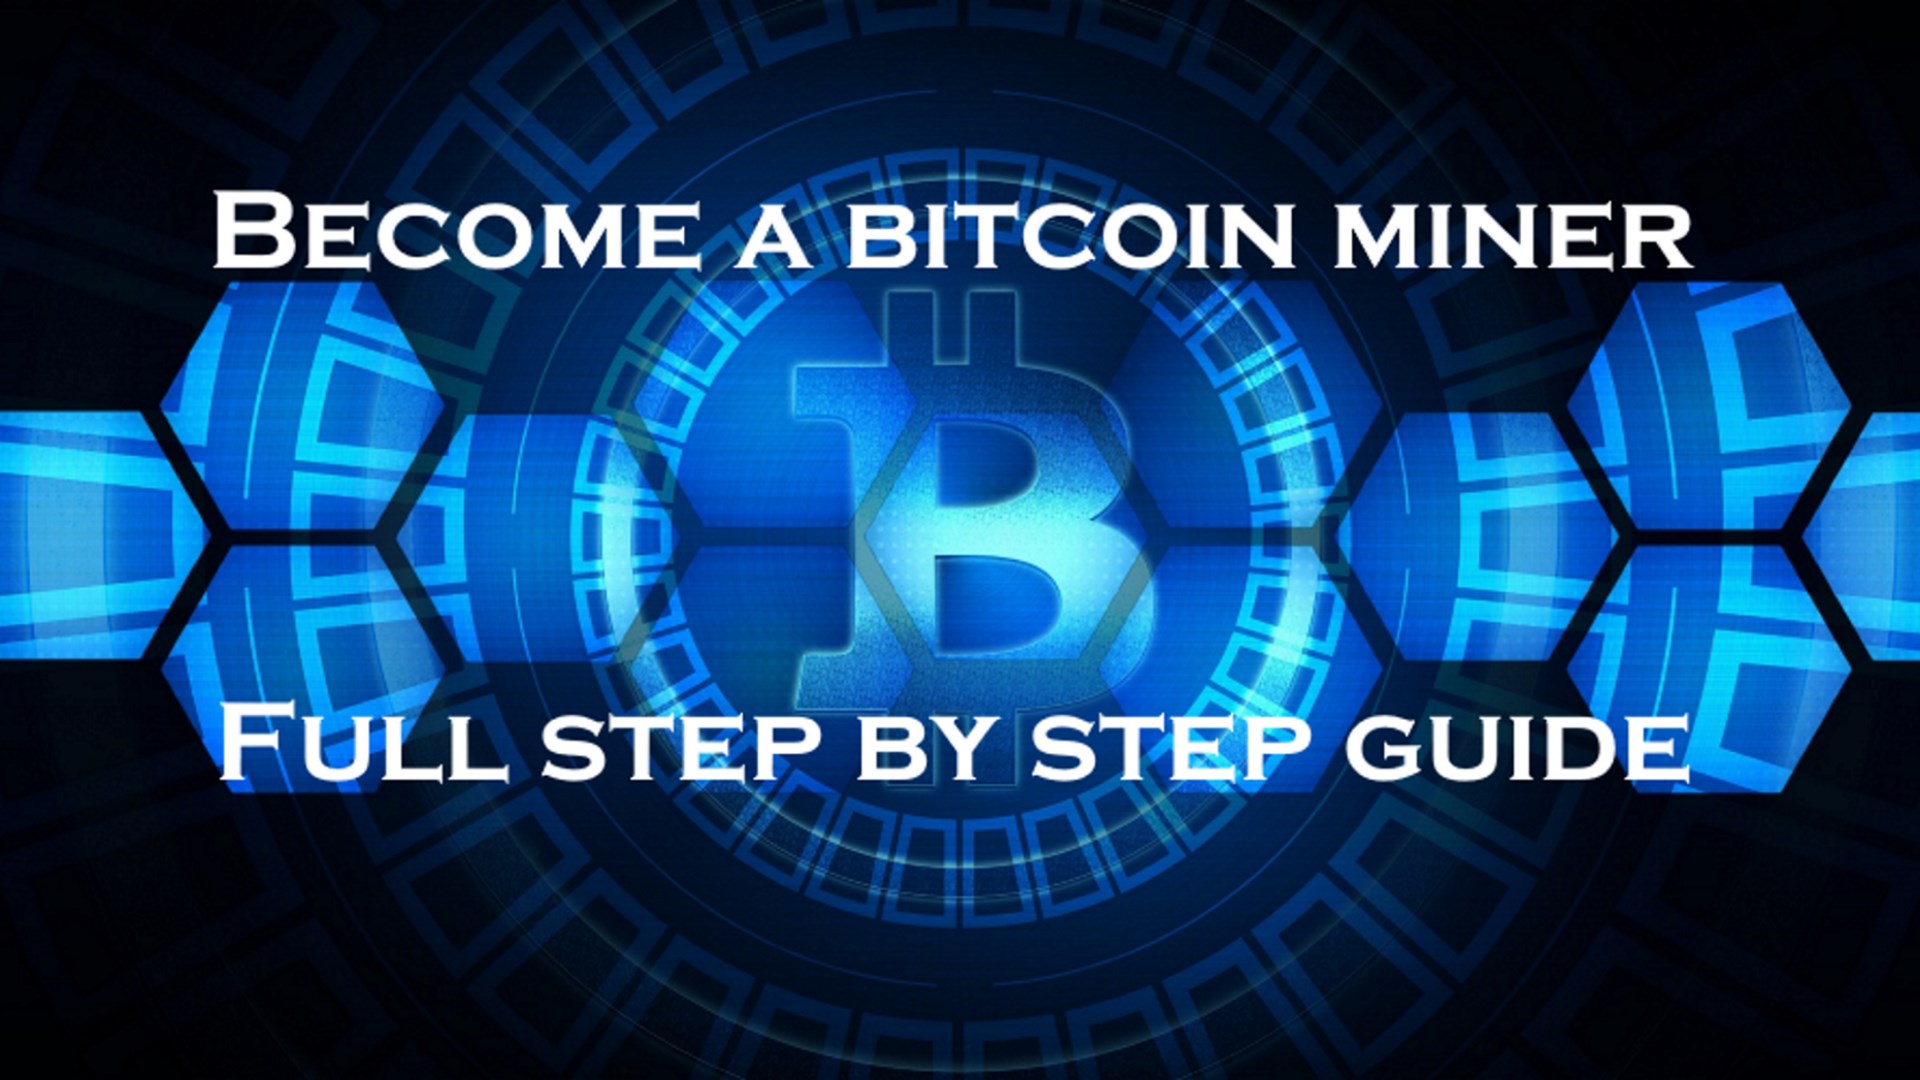 Bitcoin mining guide